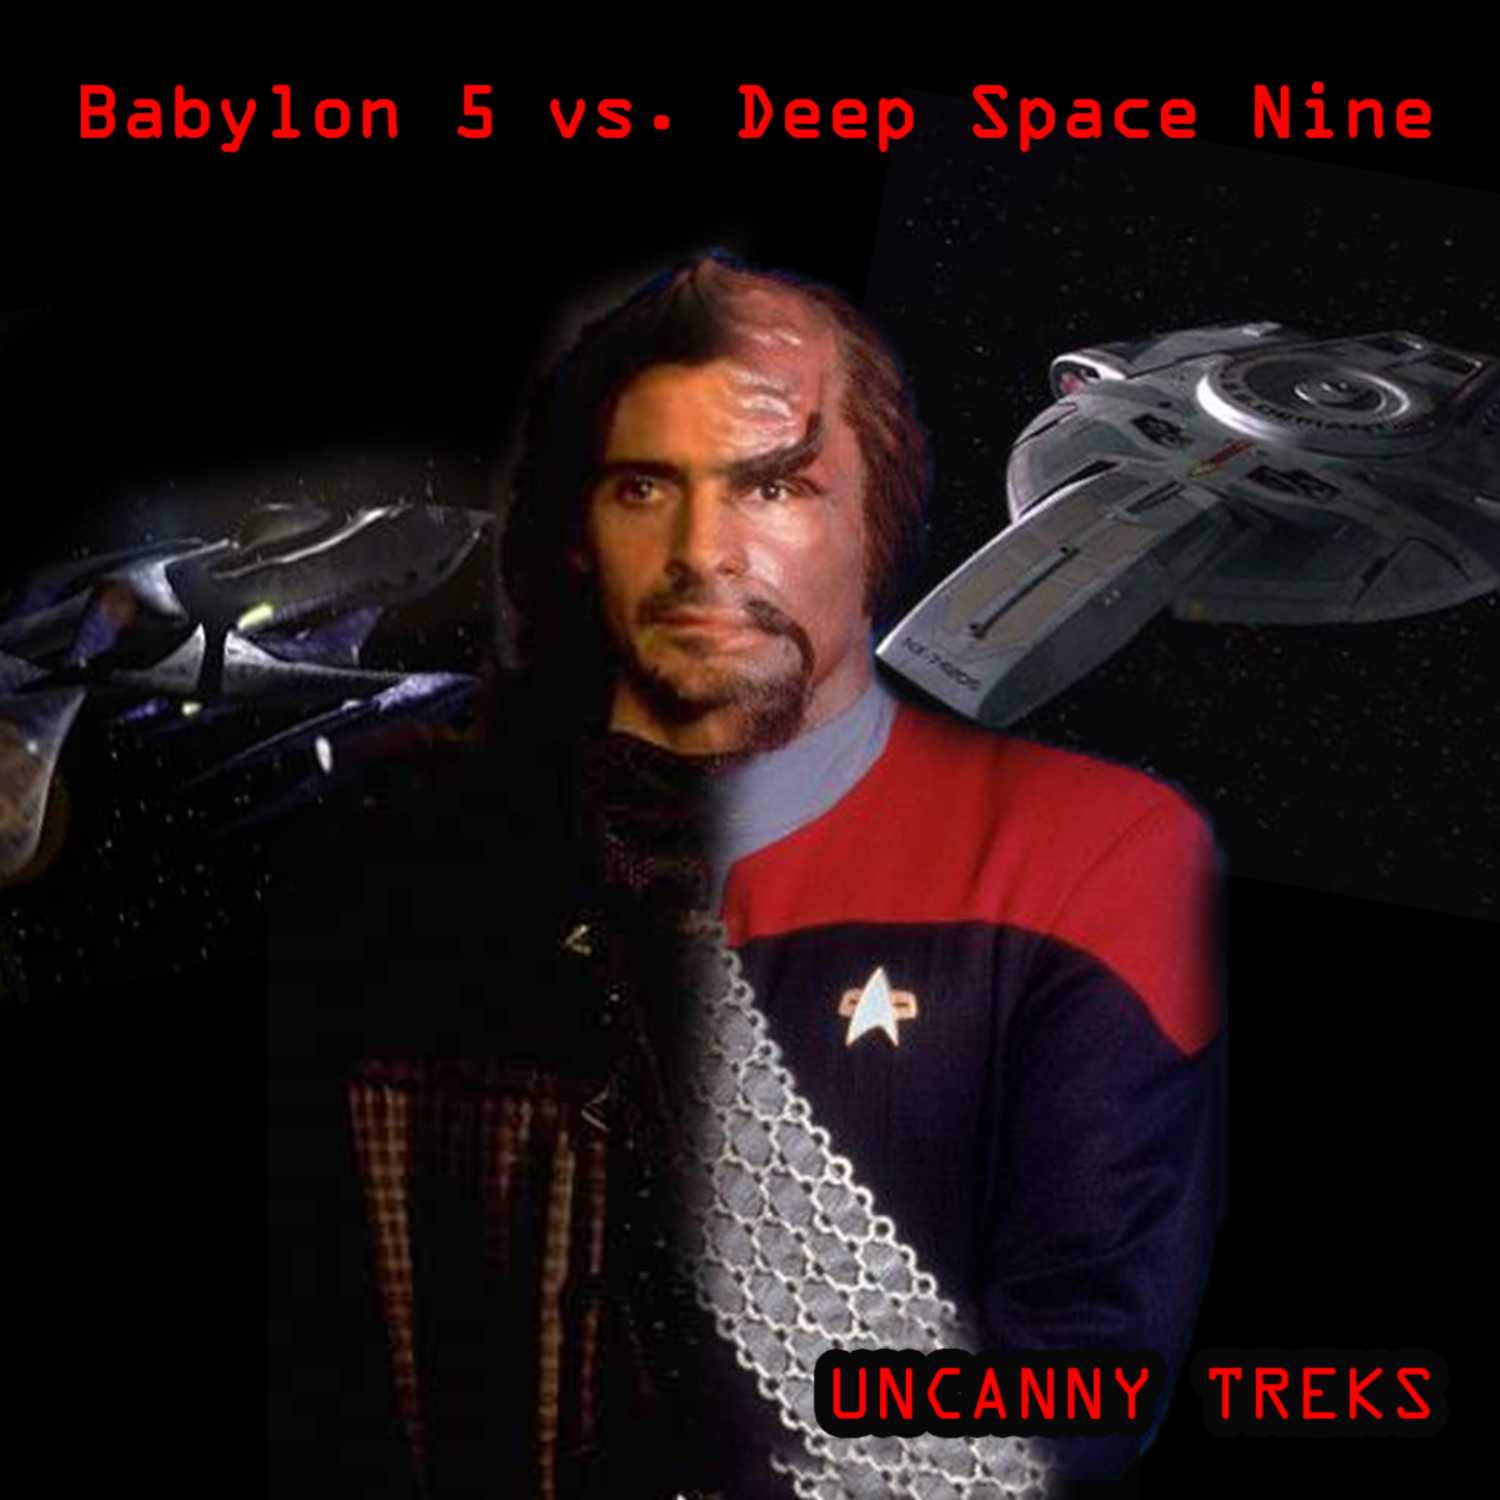 Babylon 5 vs. Deep Space 9- 